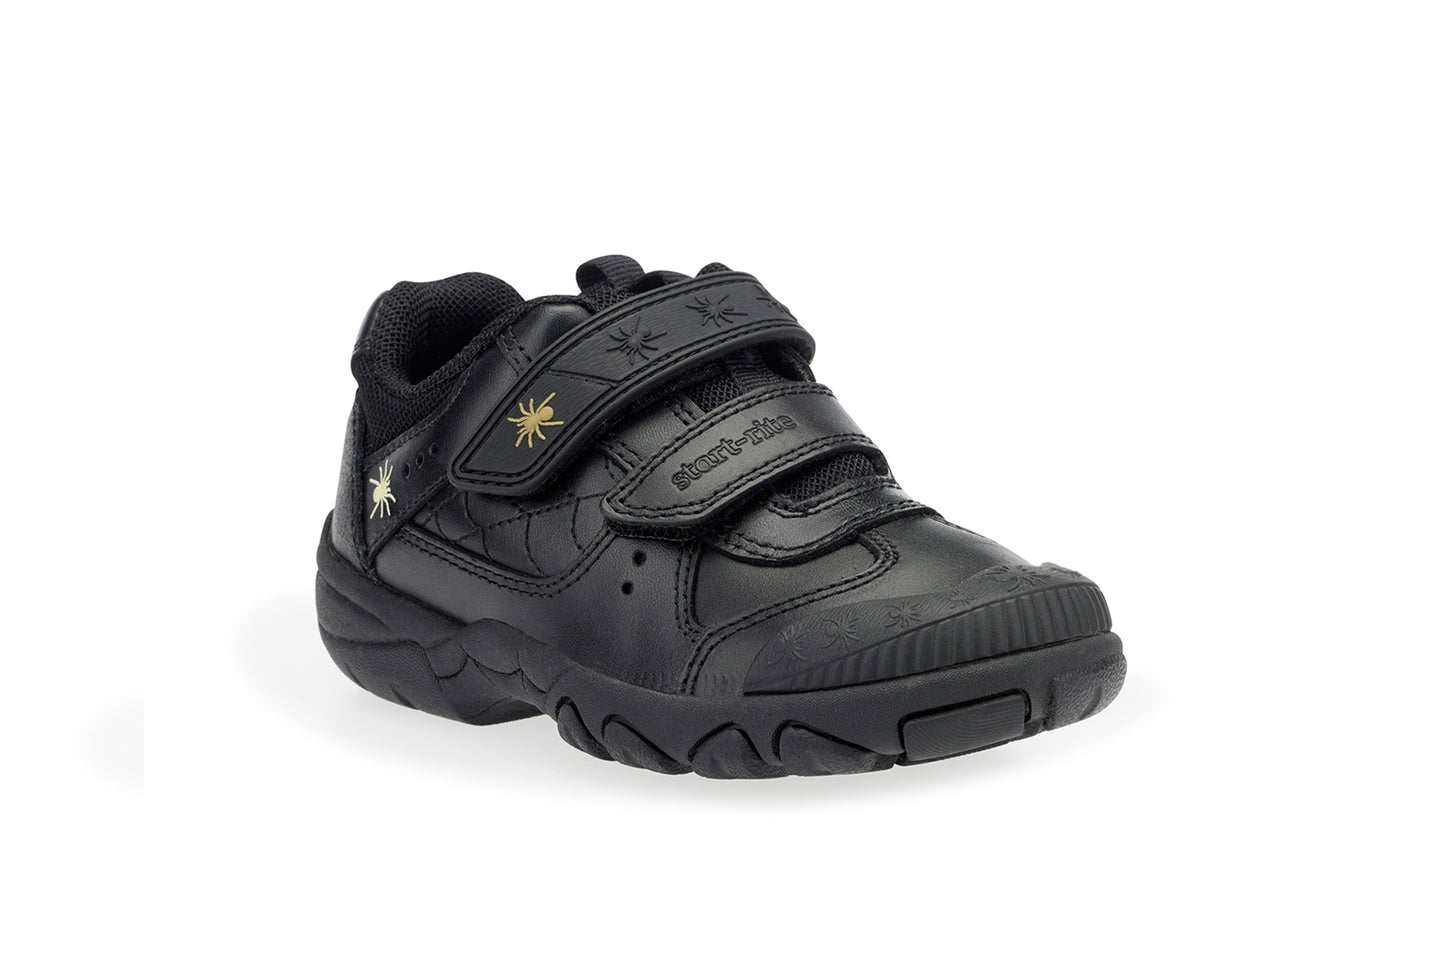 Tarantula Black Leather Boys School Shoe